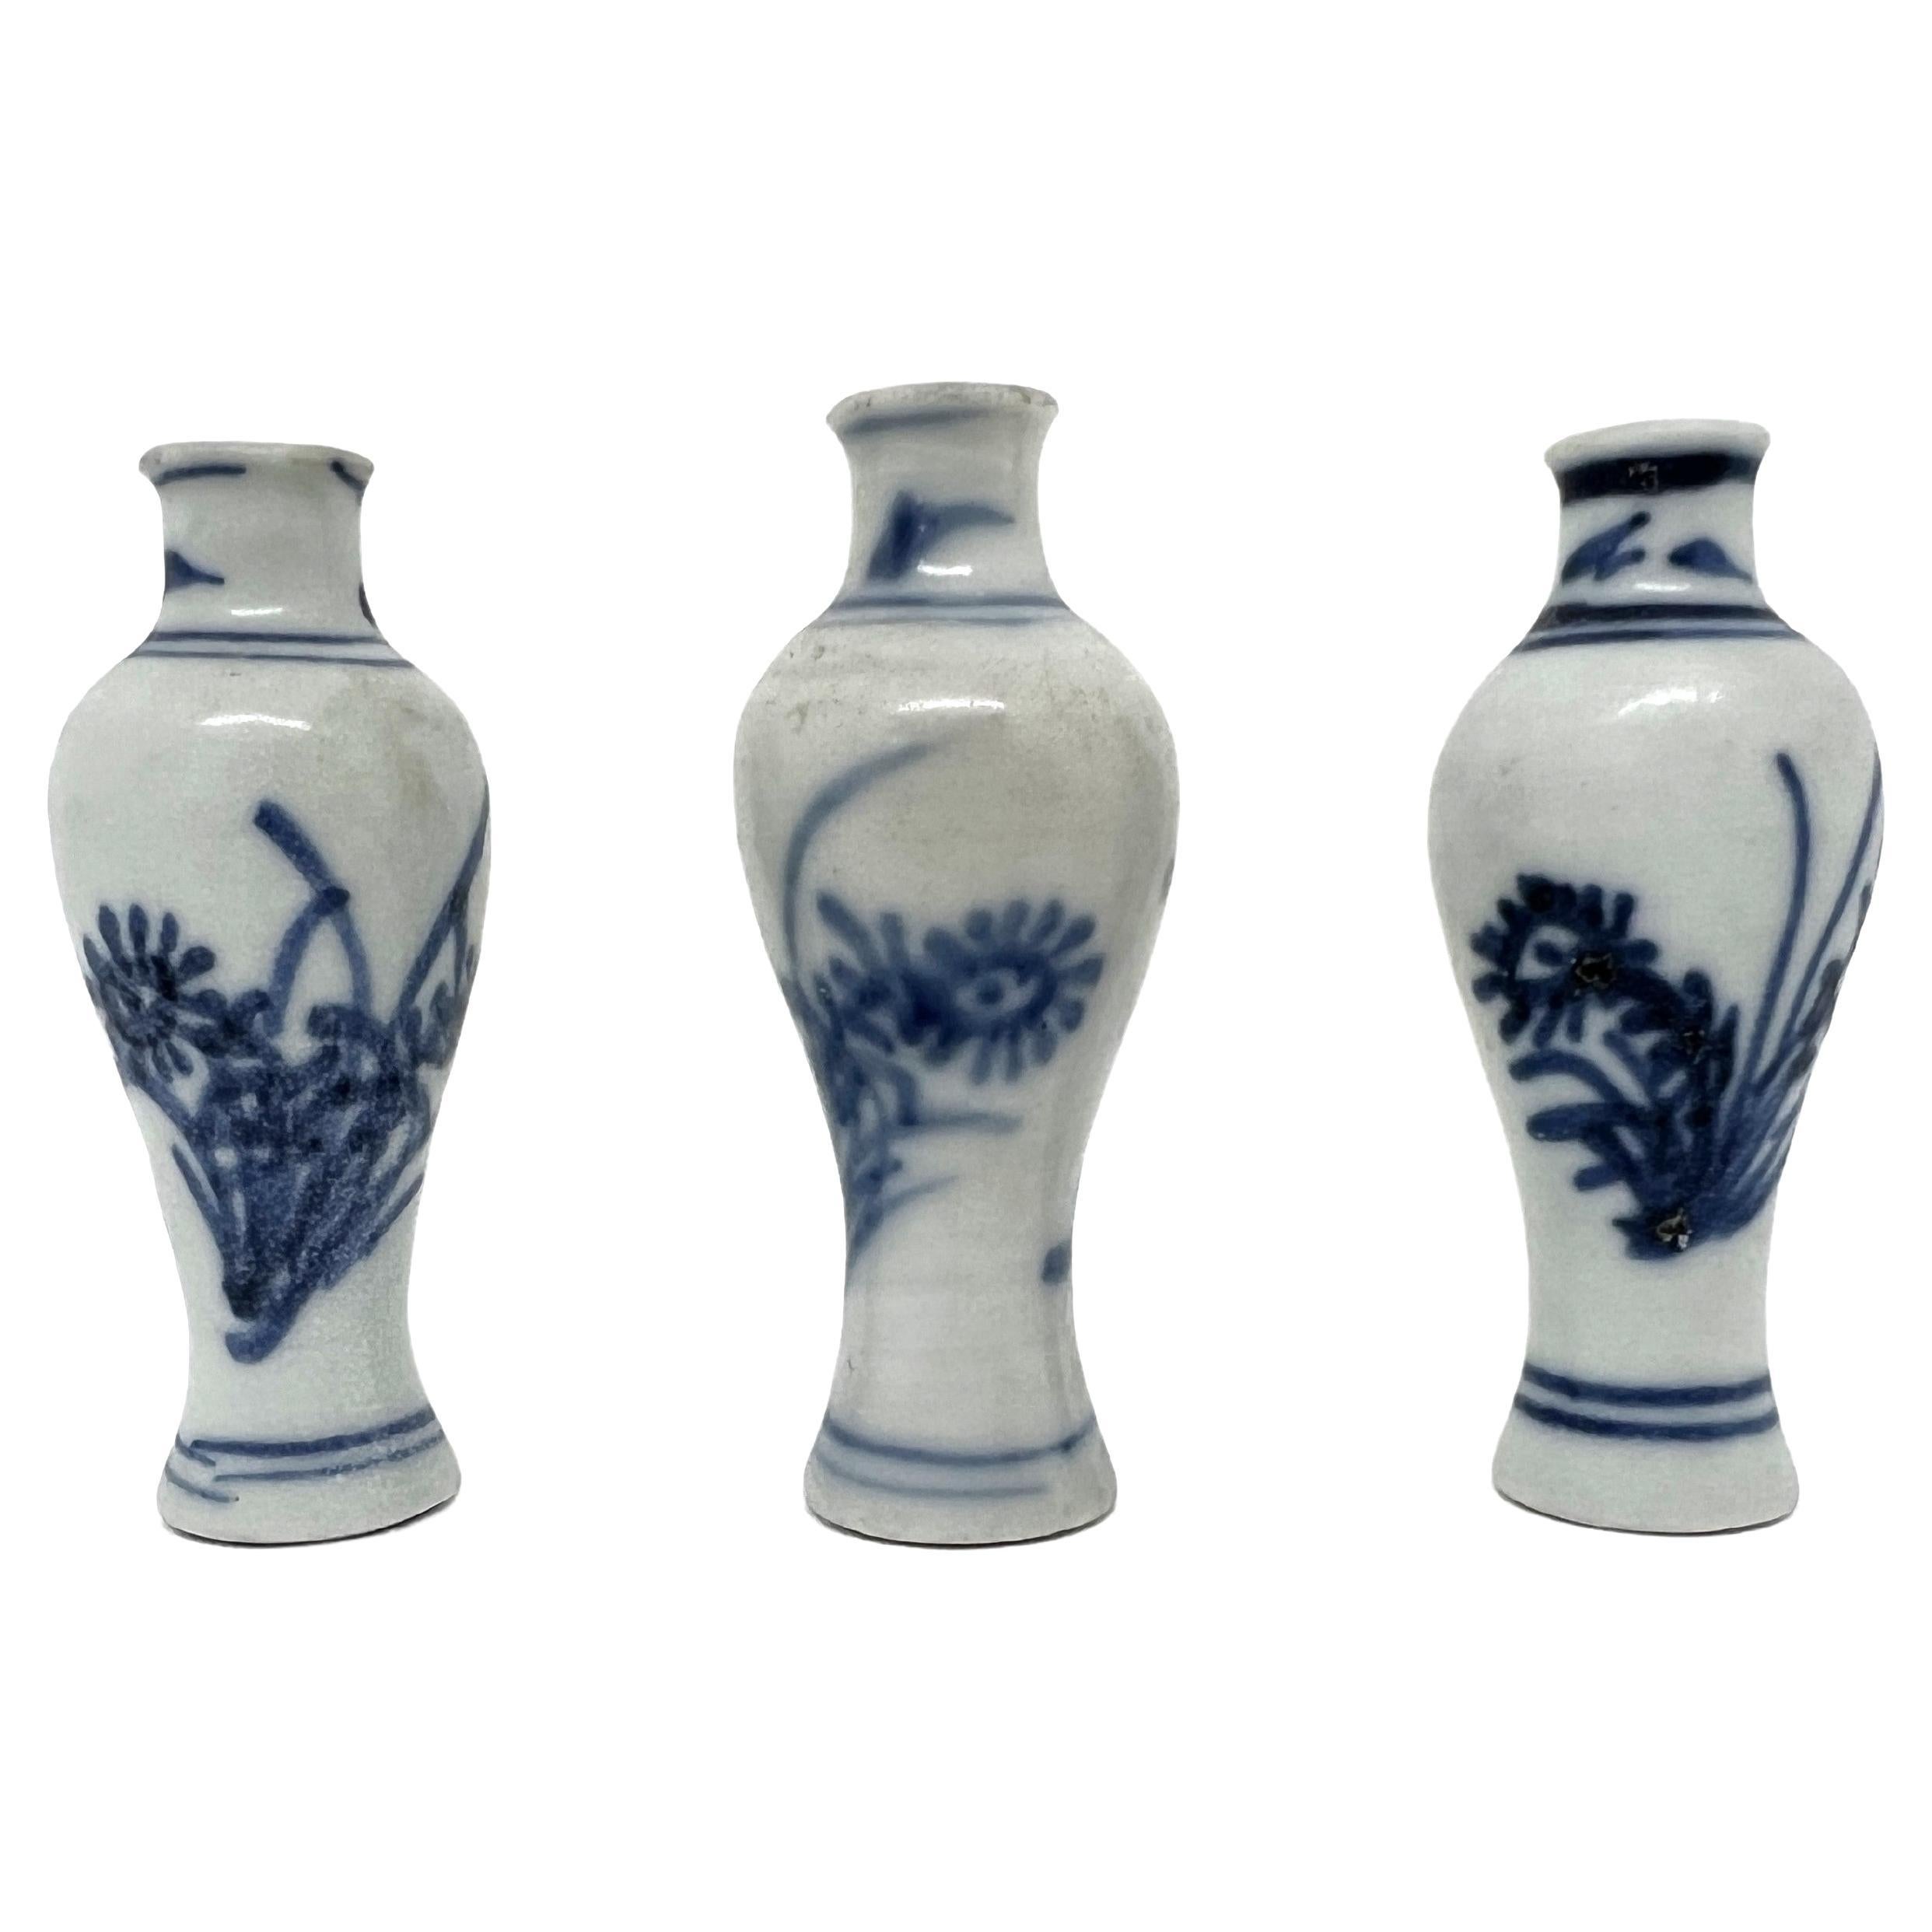 Drei blau-weiße Miniatur-Vasen, 1725, Qing Dynastie, Yongzheng-Ära